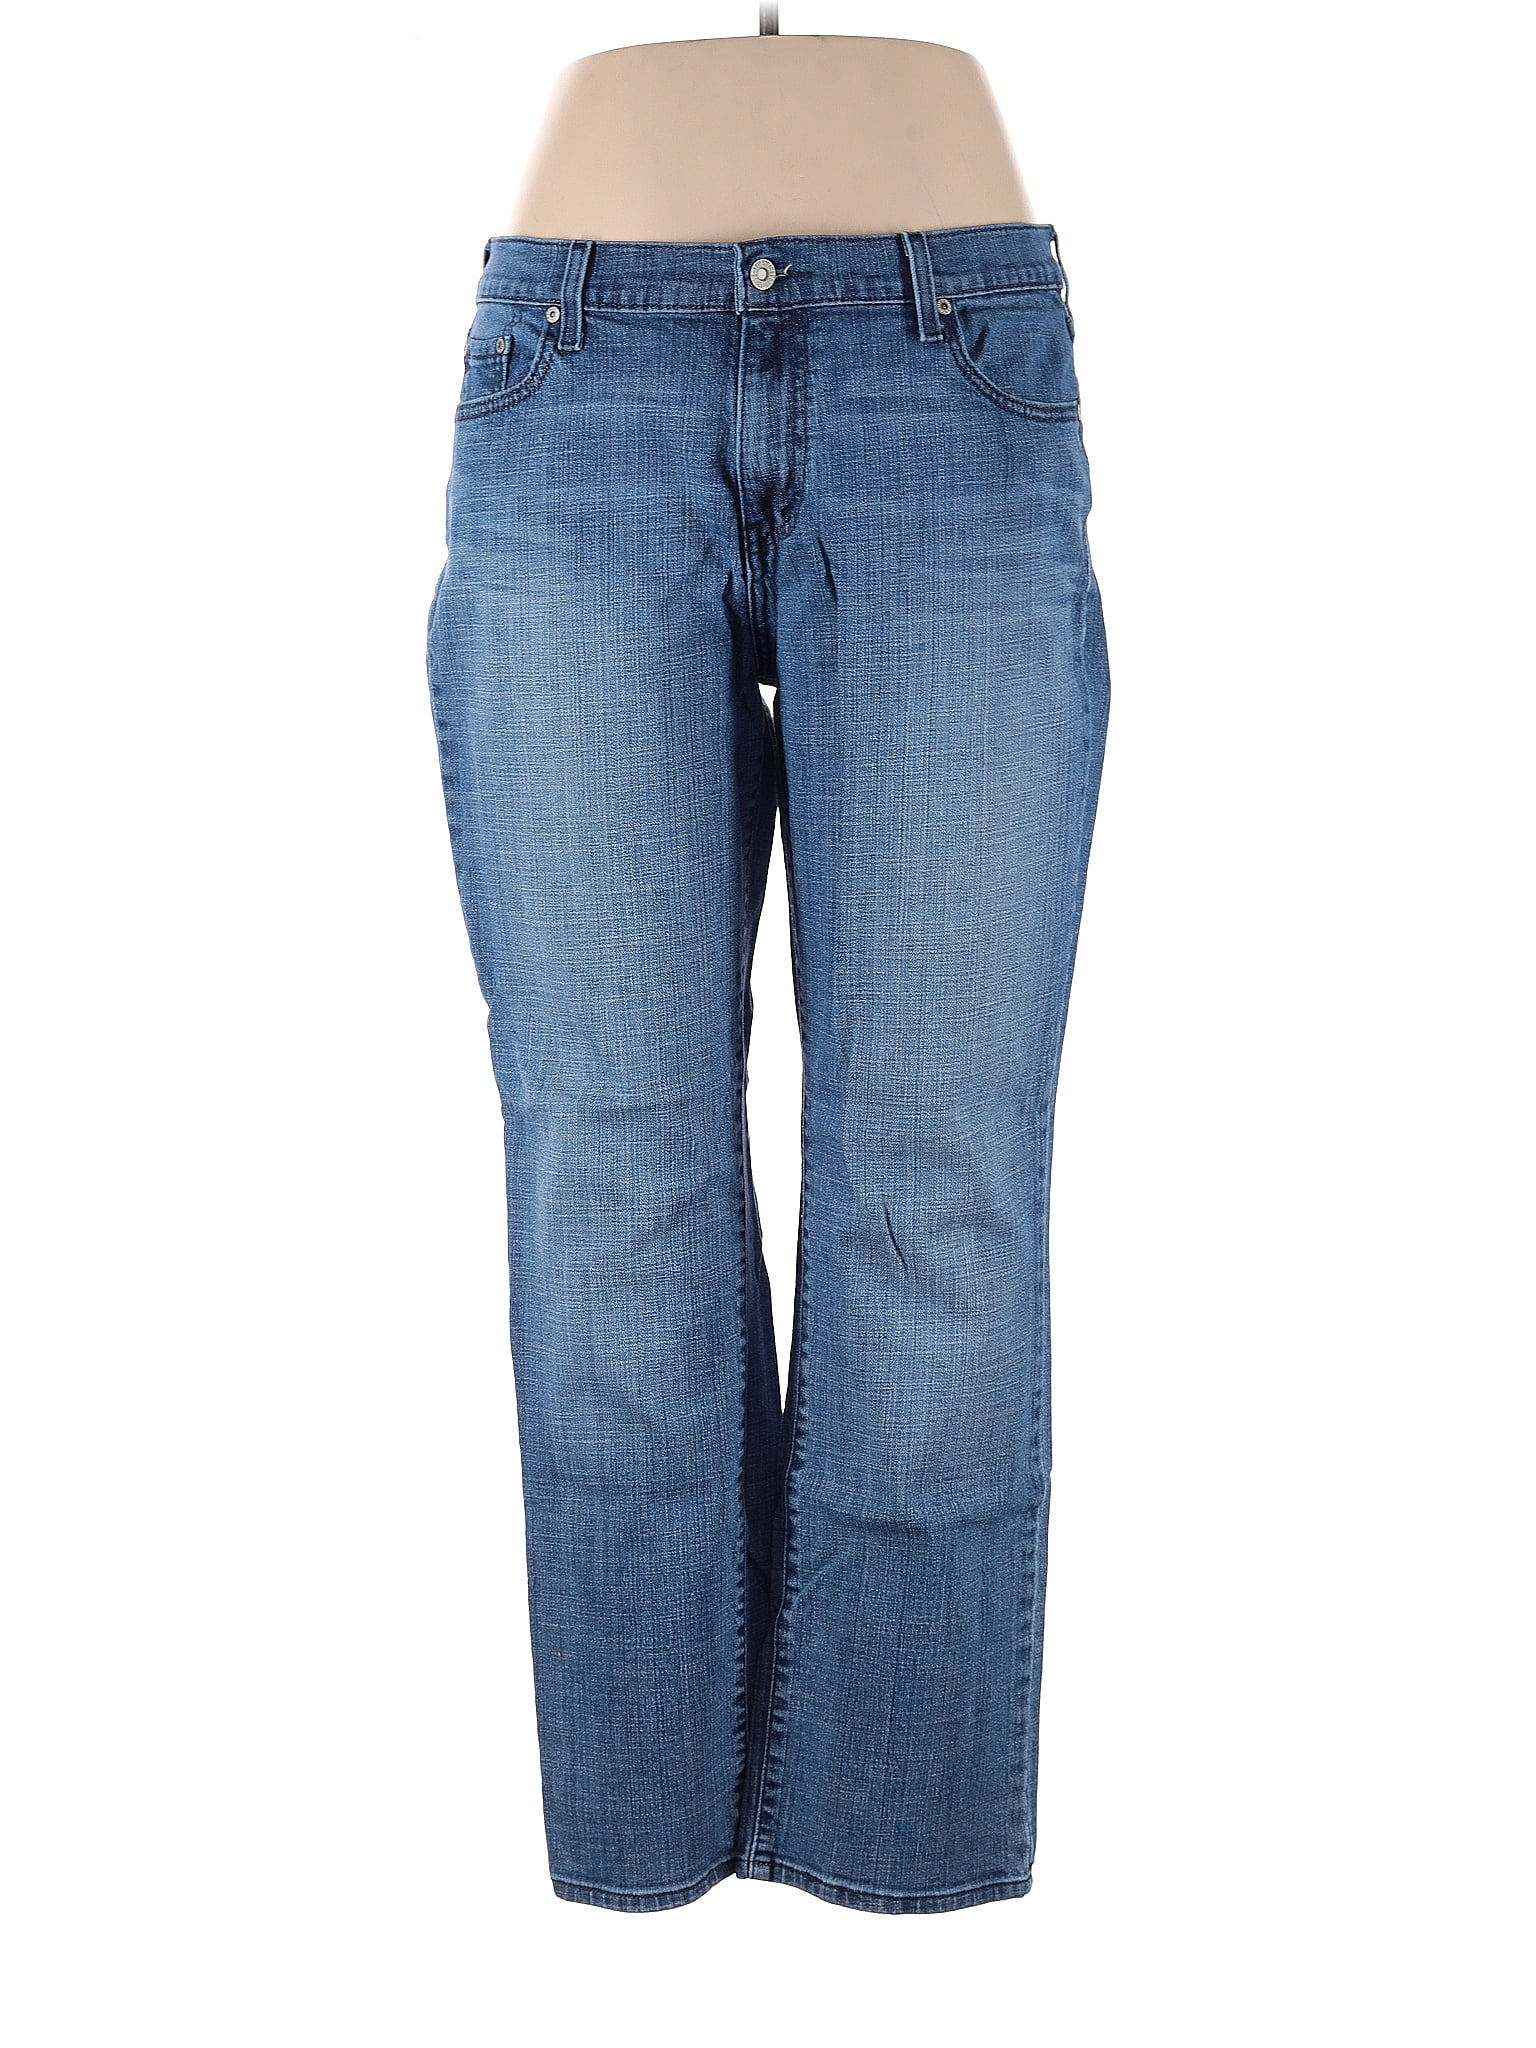 Levi's Solid Blue Jeans Size 16 - 60% off | ThredUp